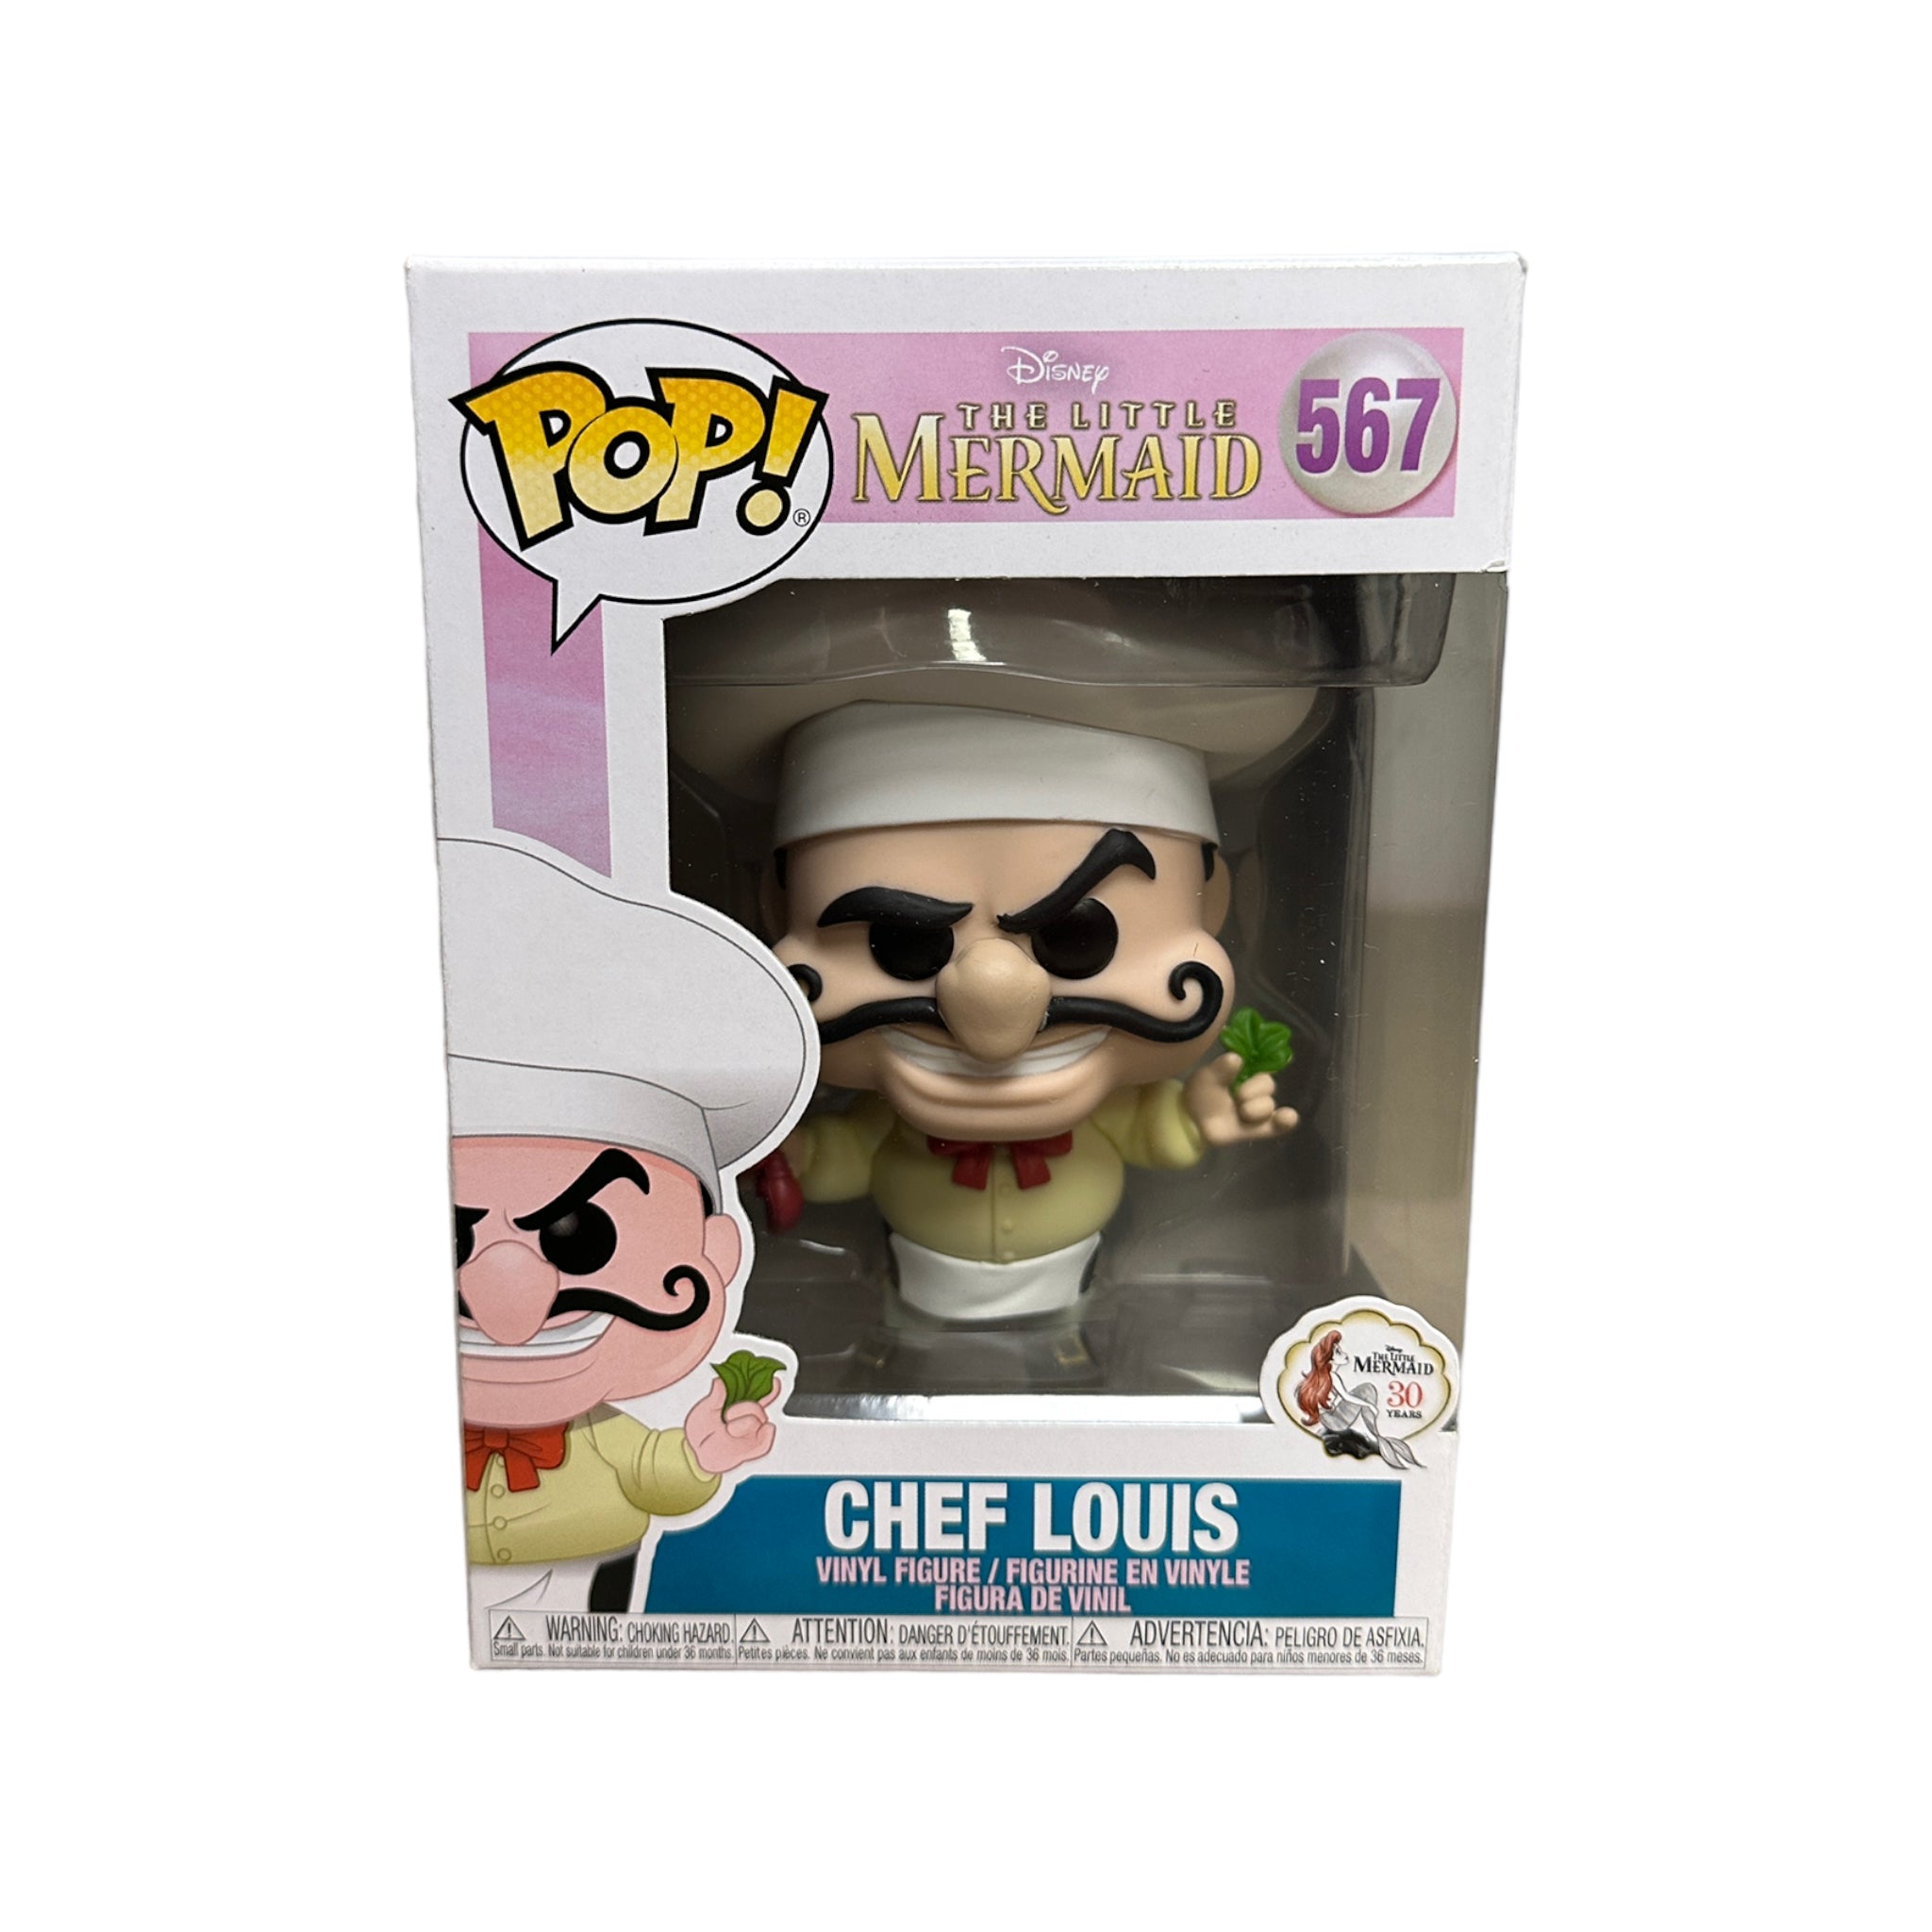 Chef Louis #567 Funko Pop! - The Little Mermaid - 2019 Pop! - Condition 8.5/10